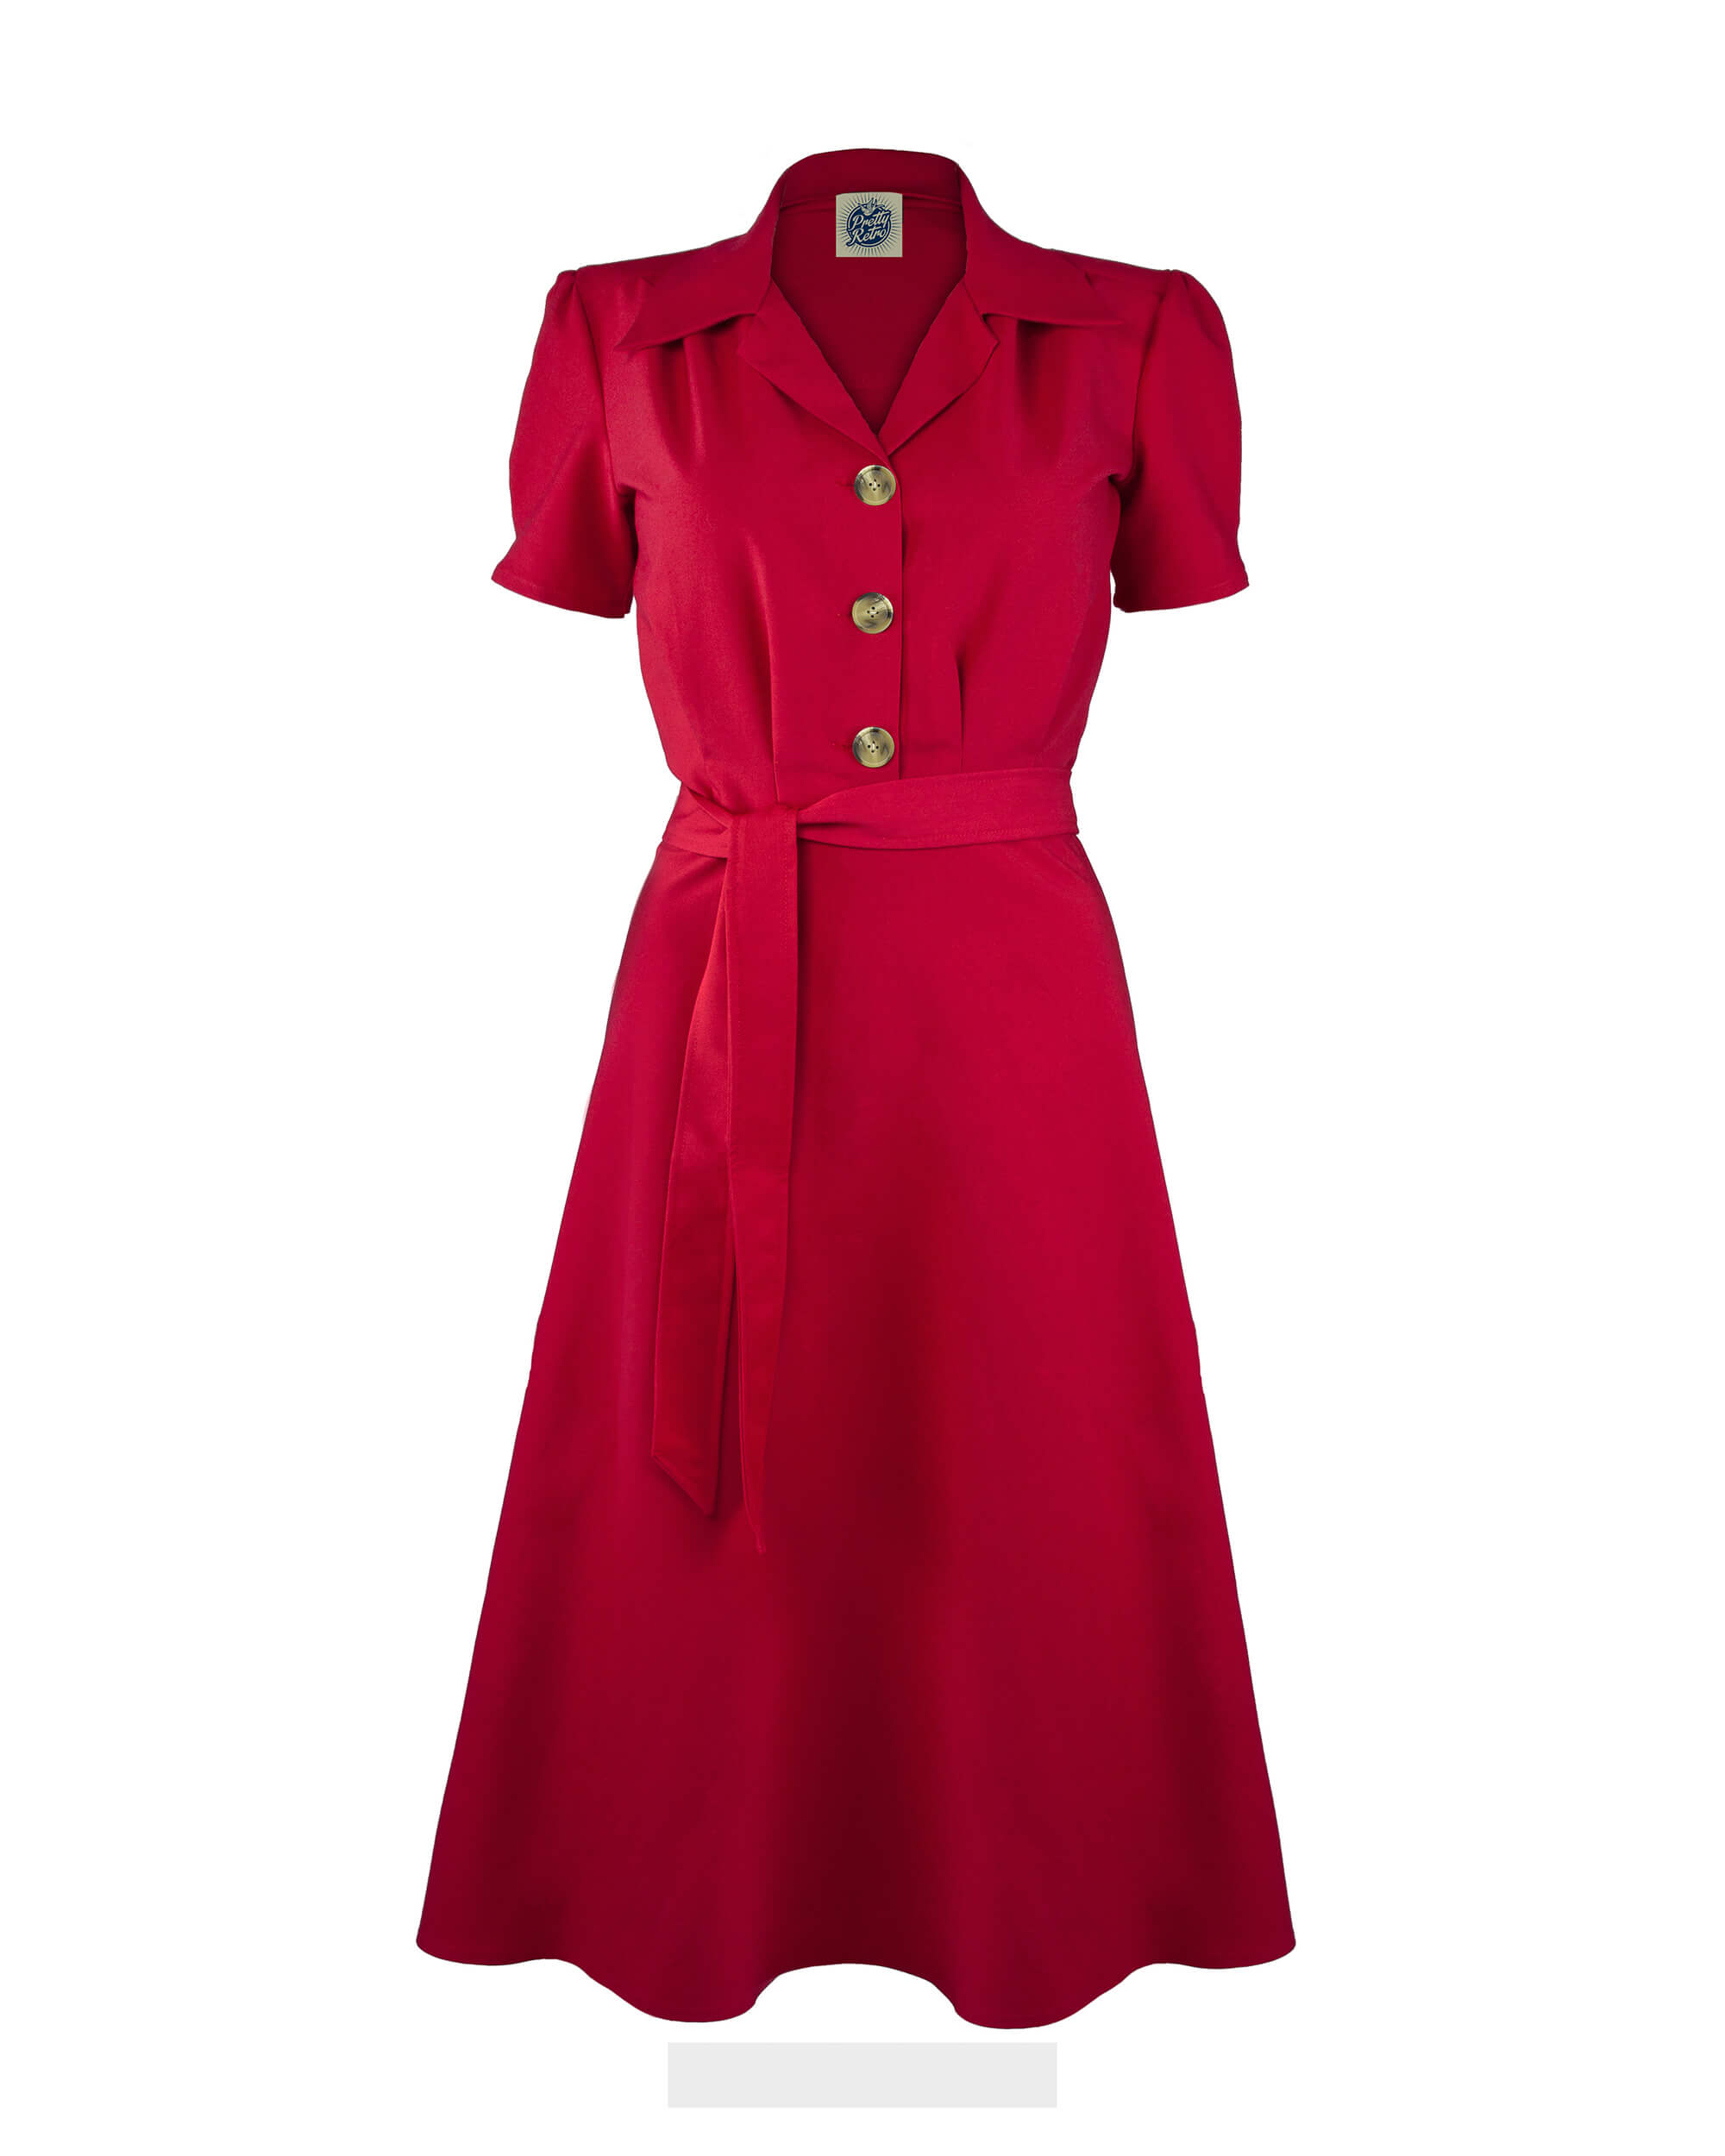 Pretty Retro 40s Shirt Dress - Red